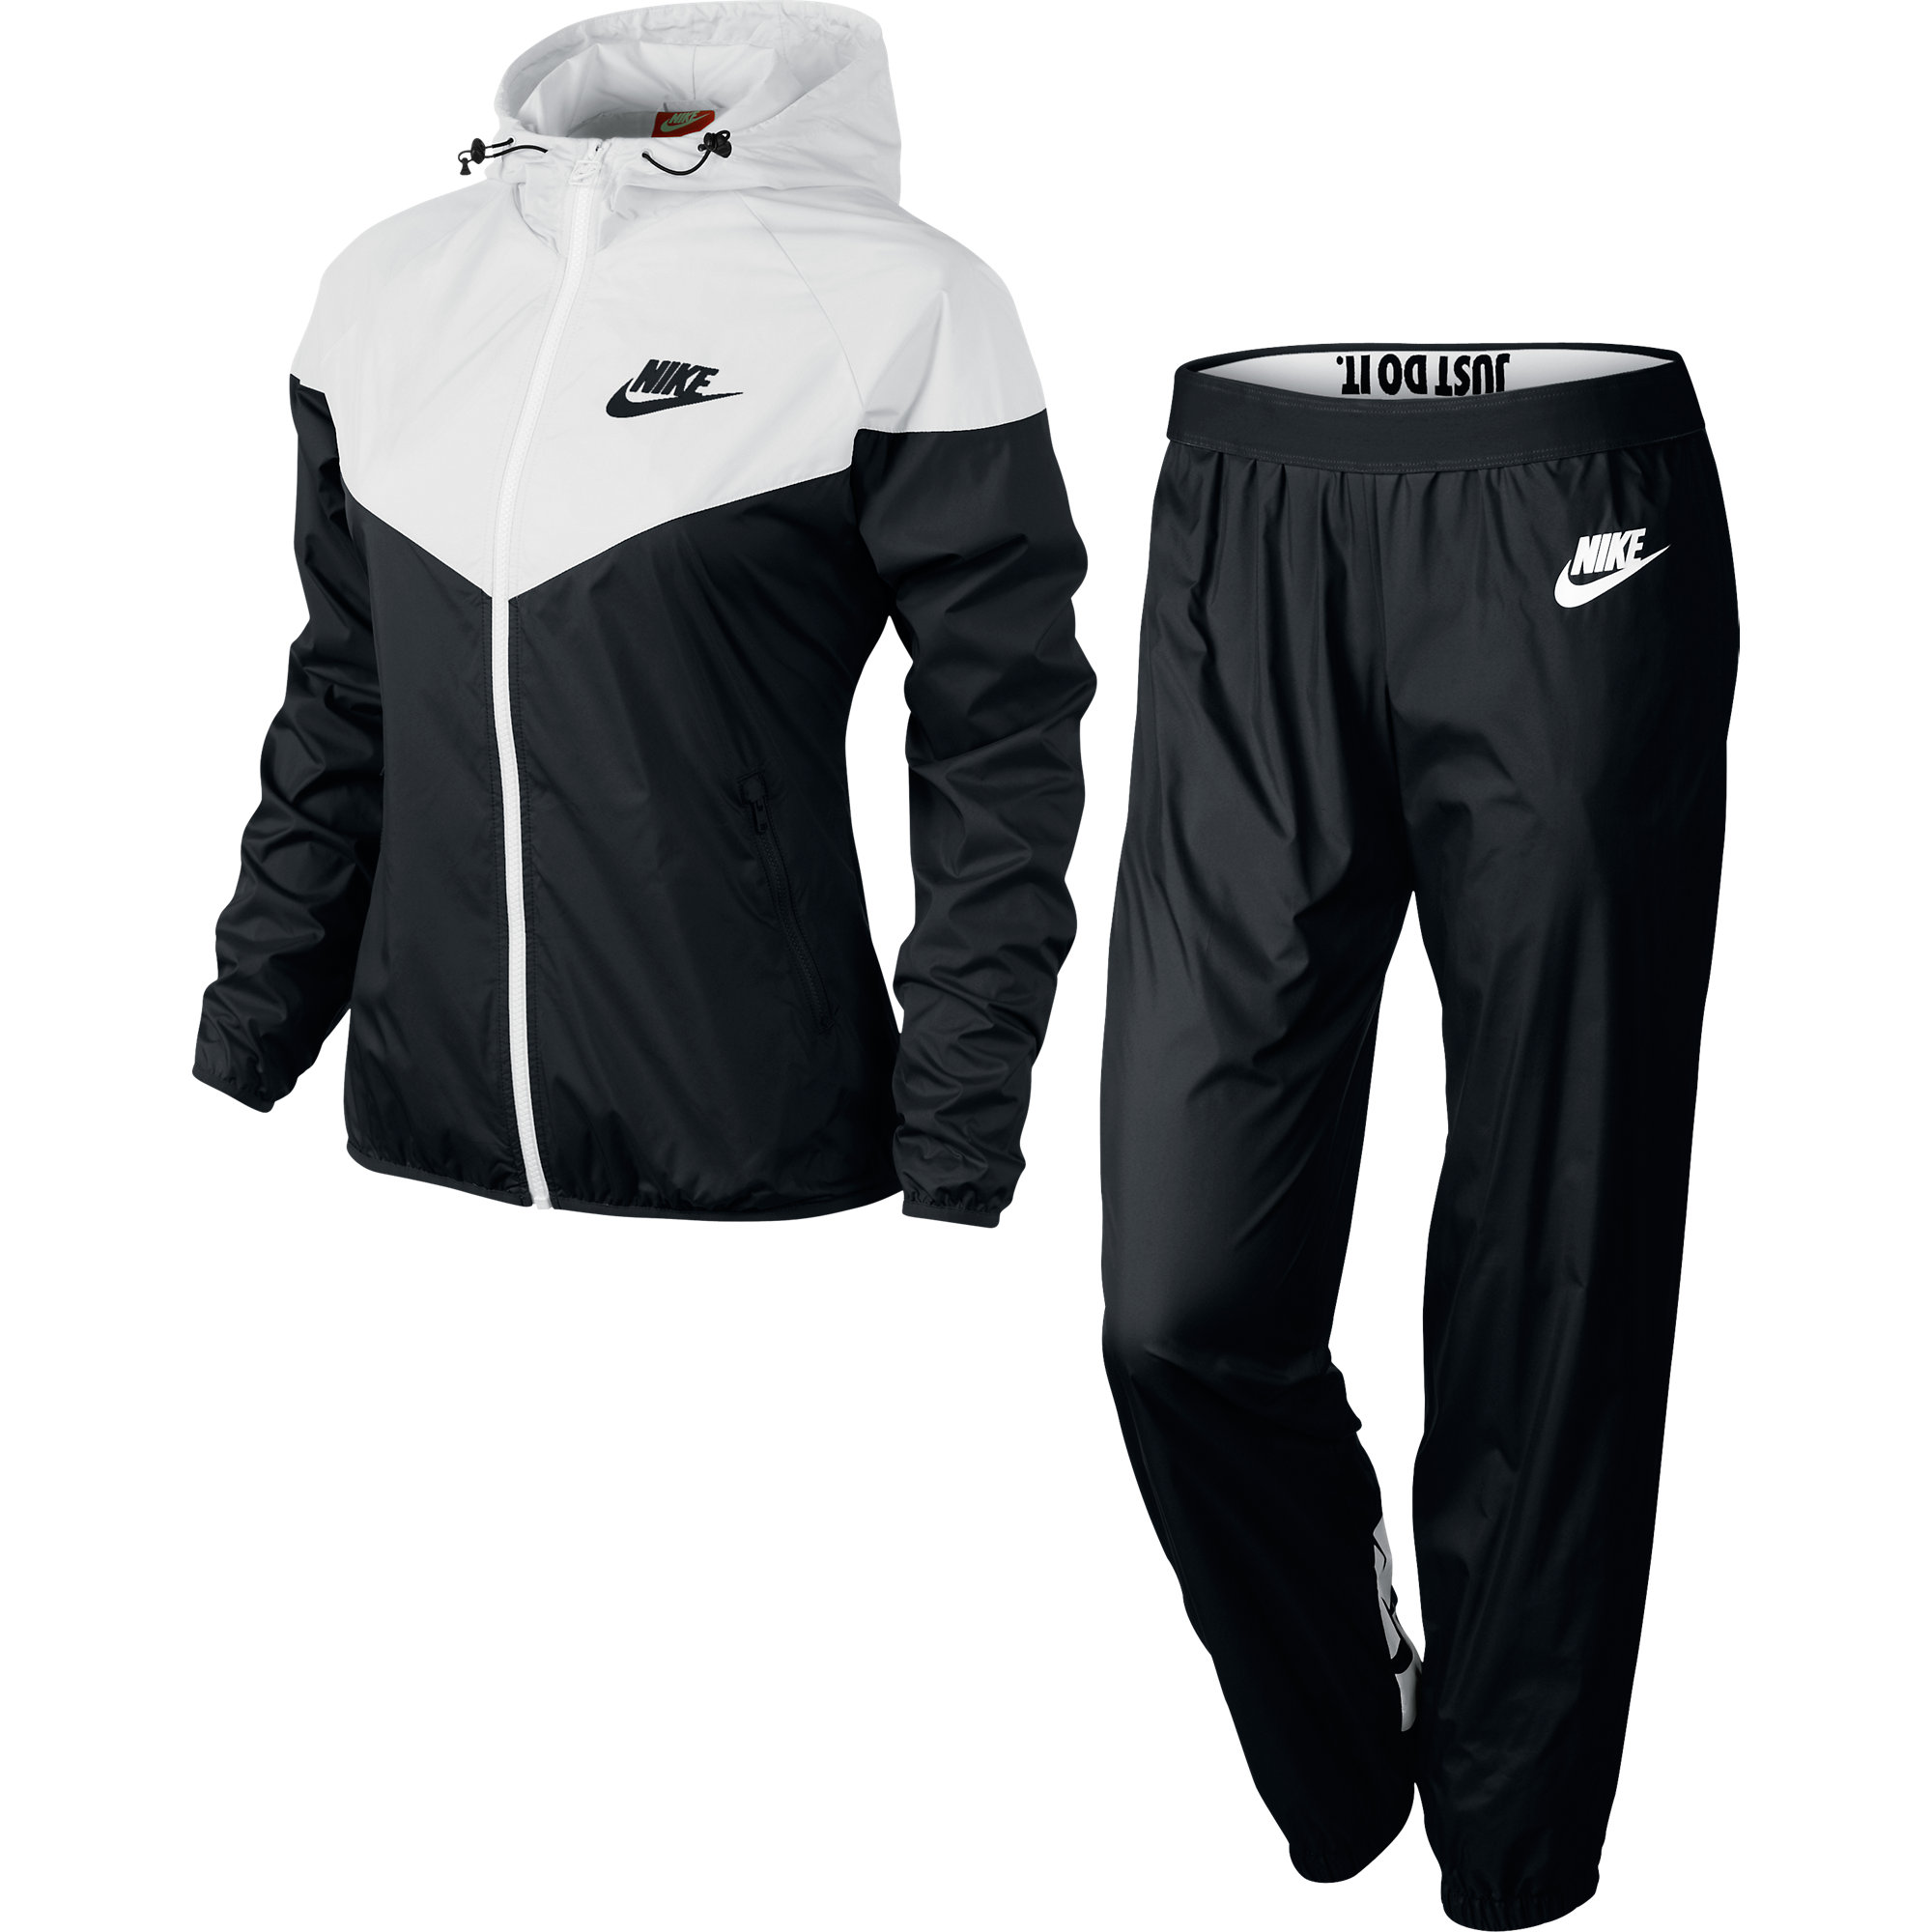 Спорт костюм. Костюм спортивный Nike bv3055-011. Костюм Nike a411. Спортивный костюм Nike (a411). Штаны Nike Windrunner.